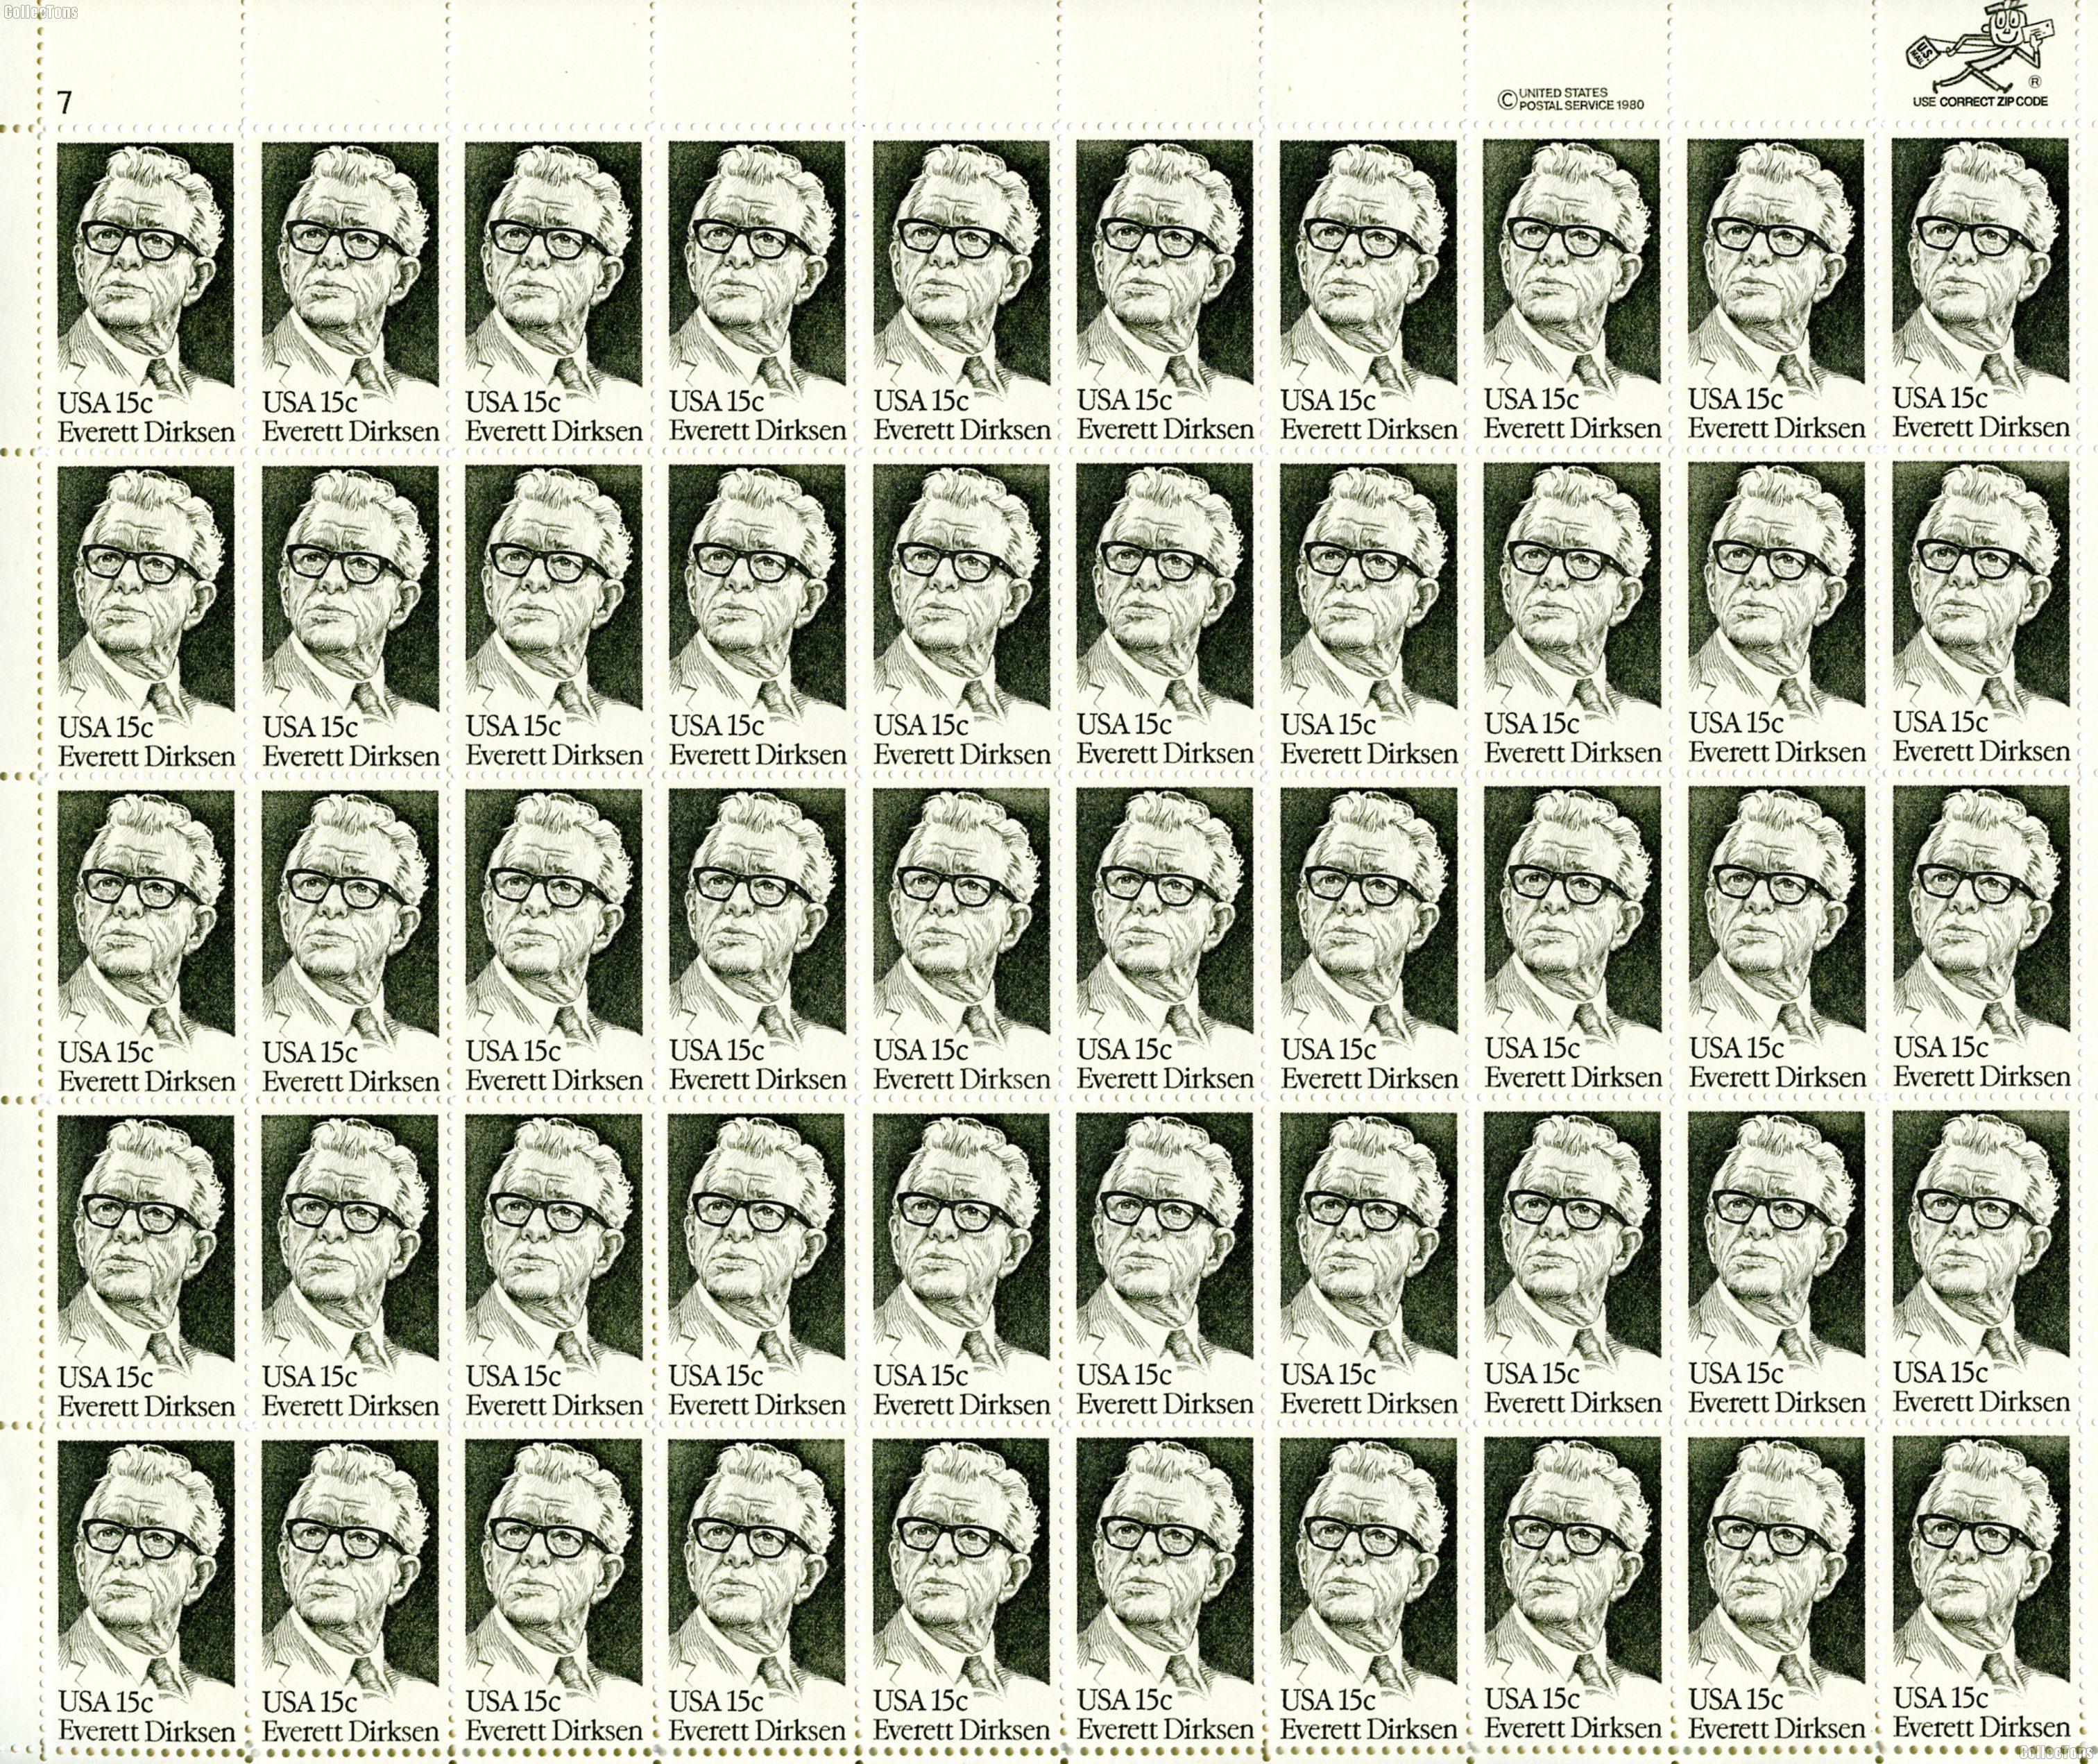 1981 Everett Dirksen 15 Cent US Postage Stamp MNH Sheet of 50 Scott #1874